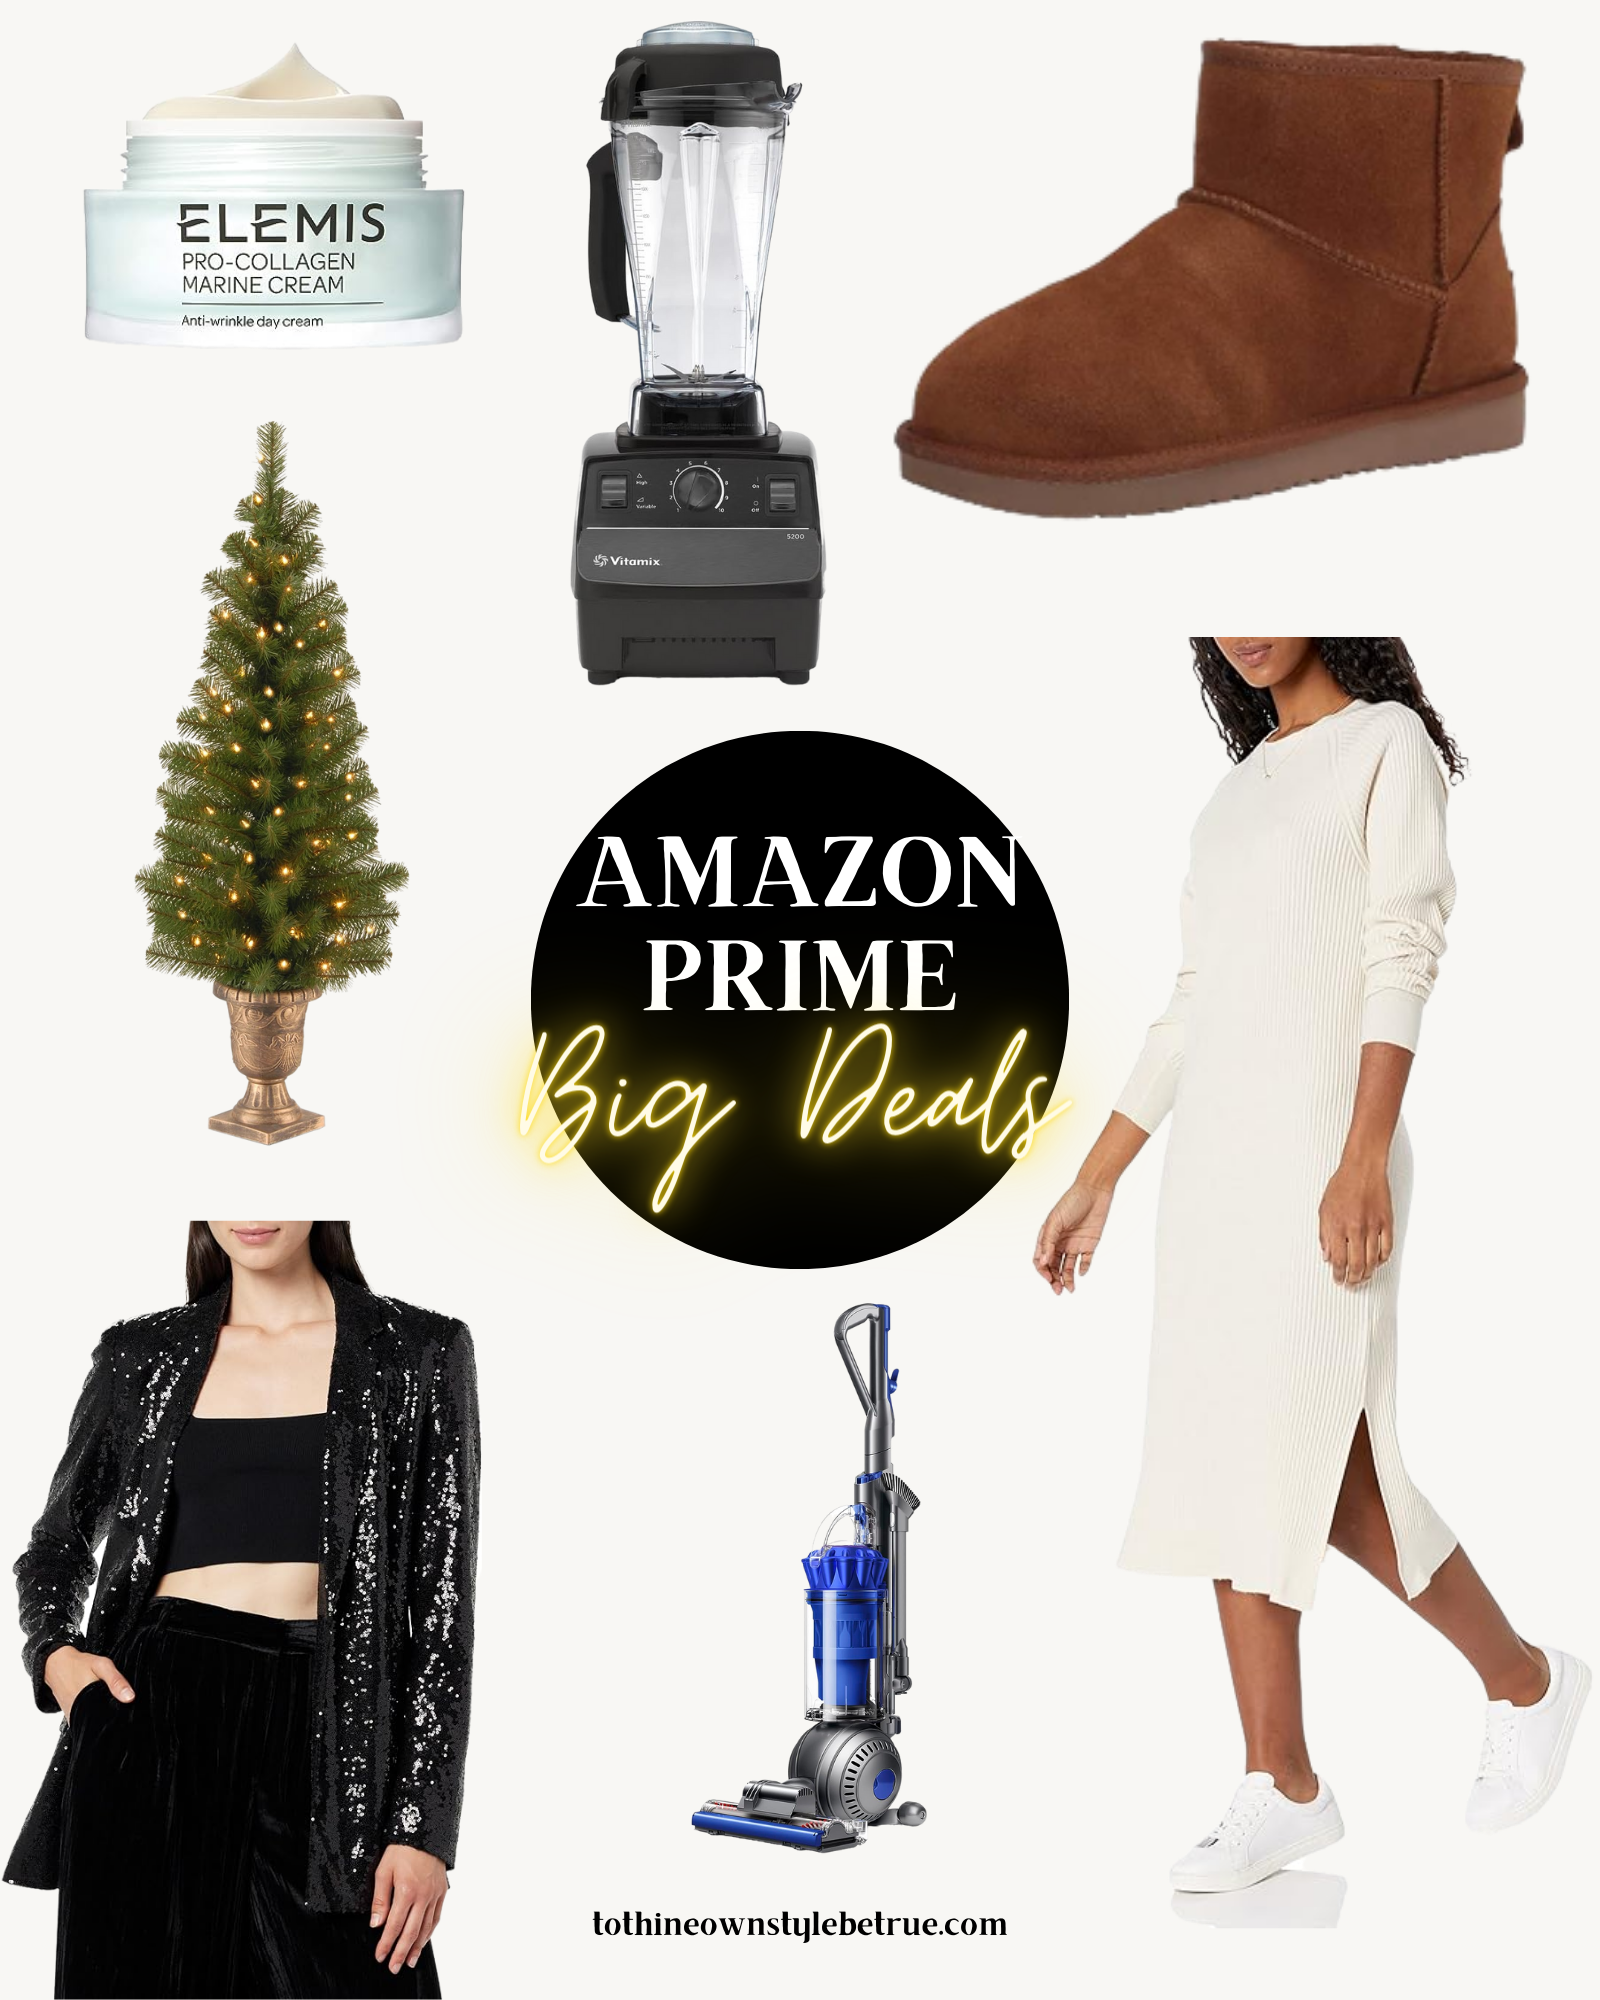 Amazon’s Prime Big Deal Days